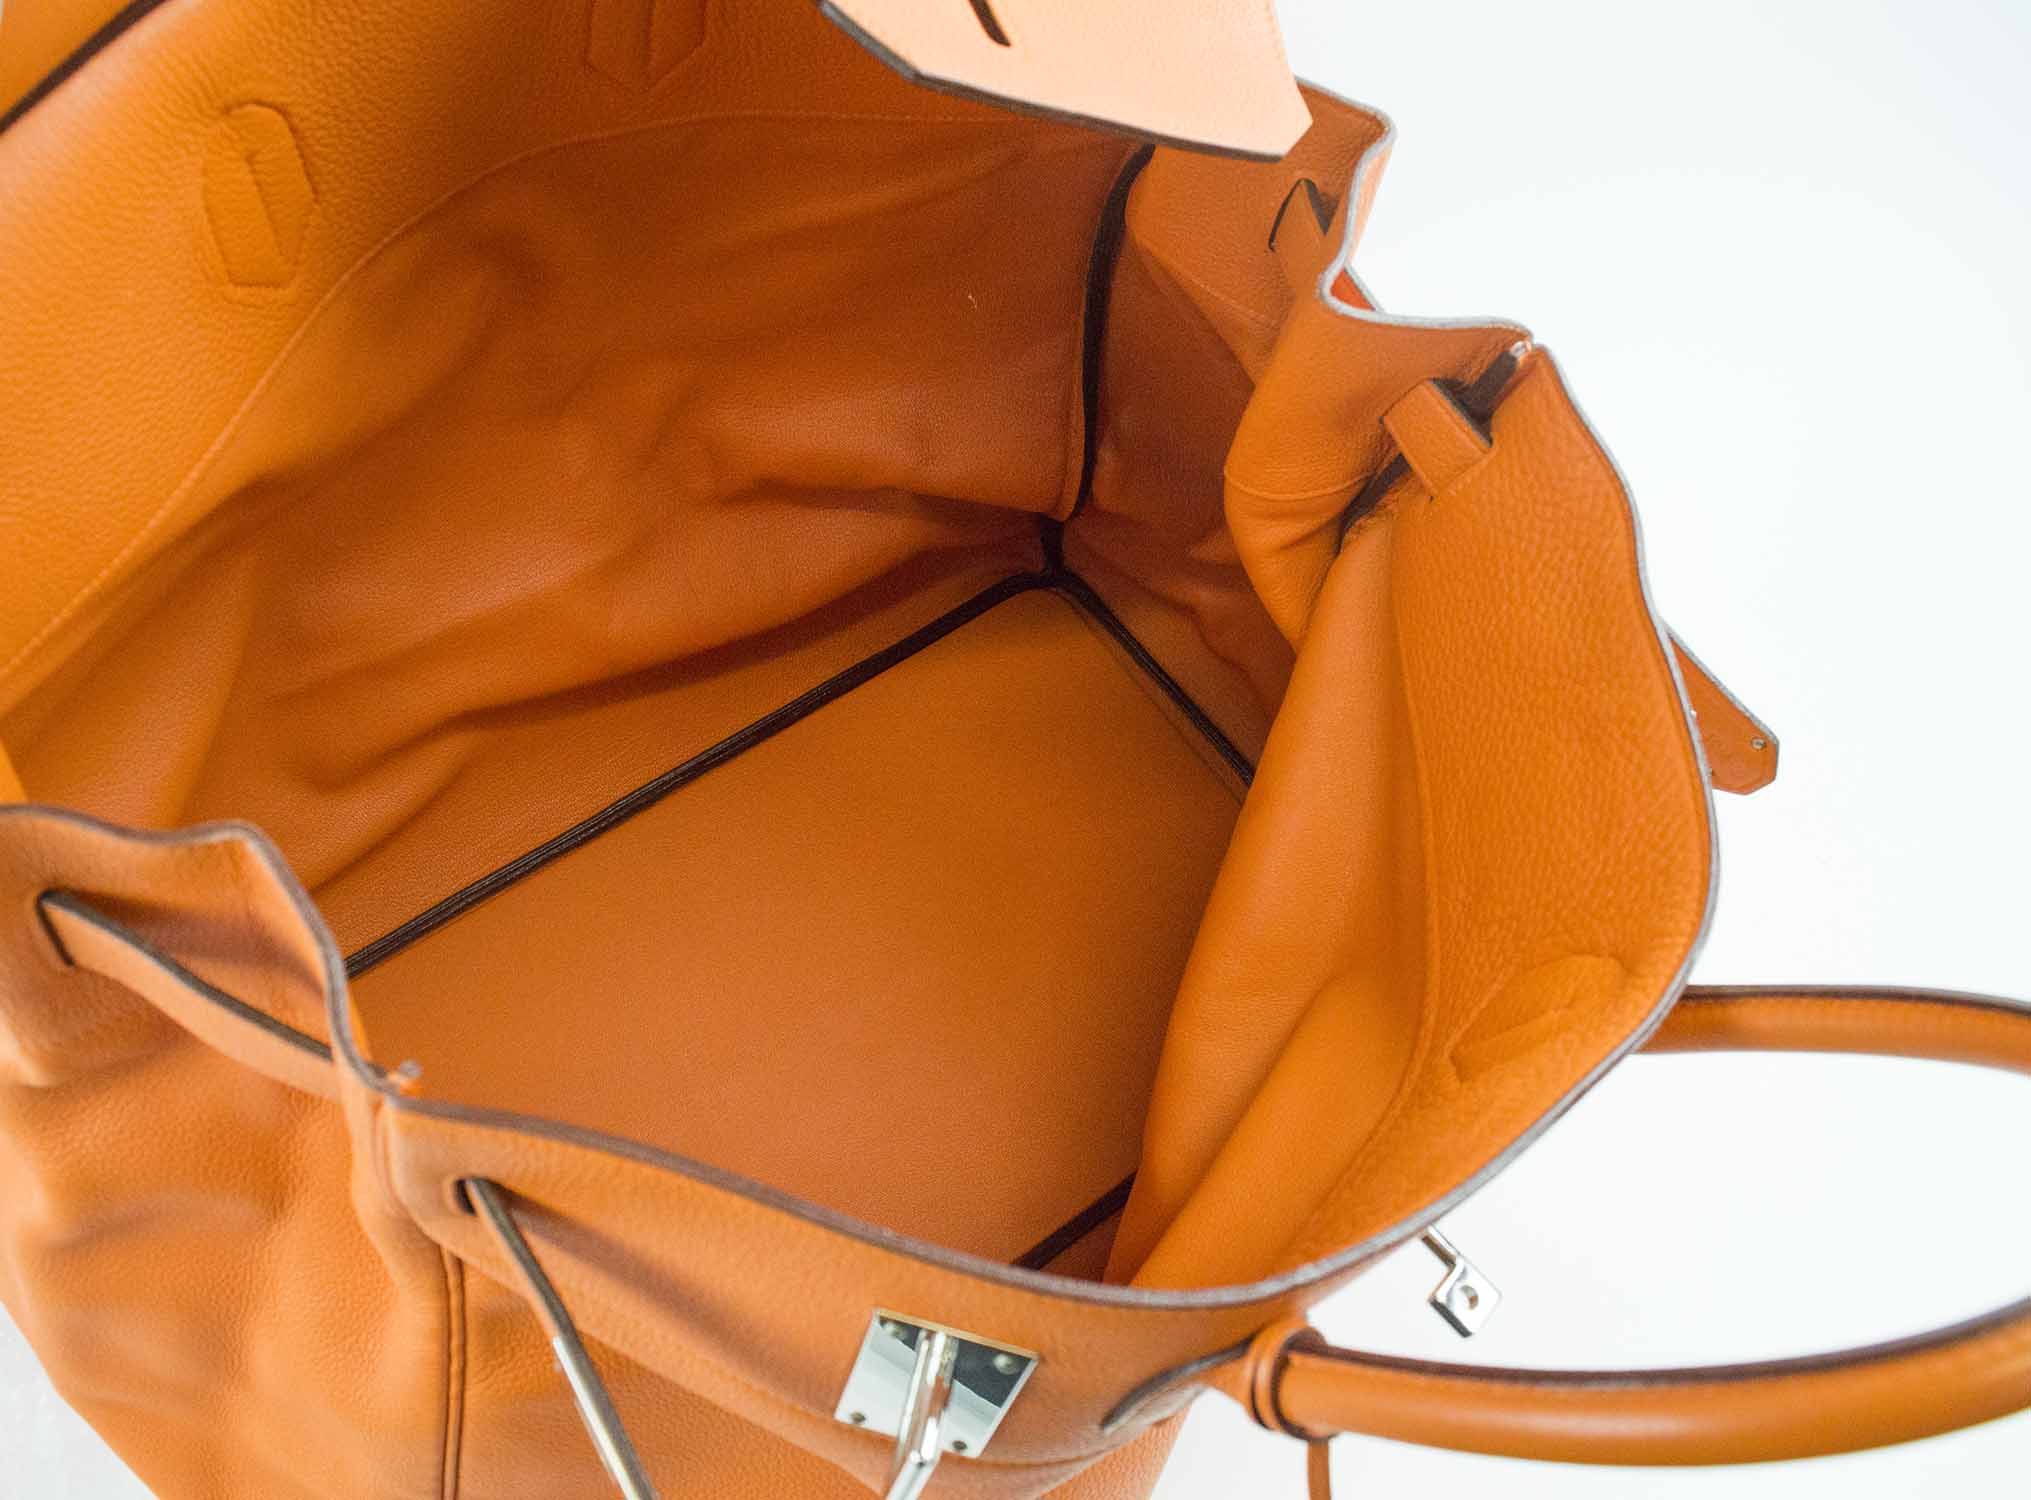 Unboxing Hermès' Haut à Courroies bag, the first of its kind